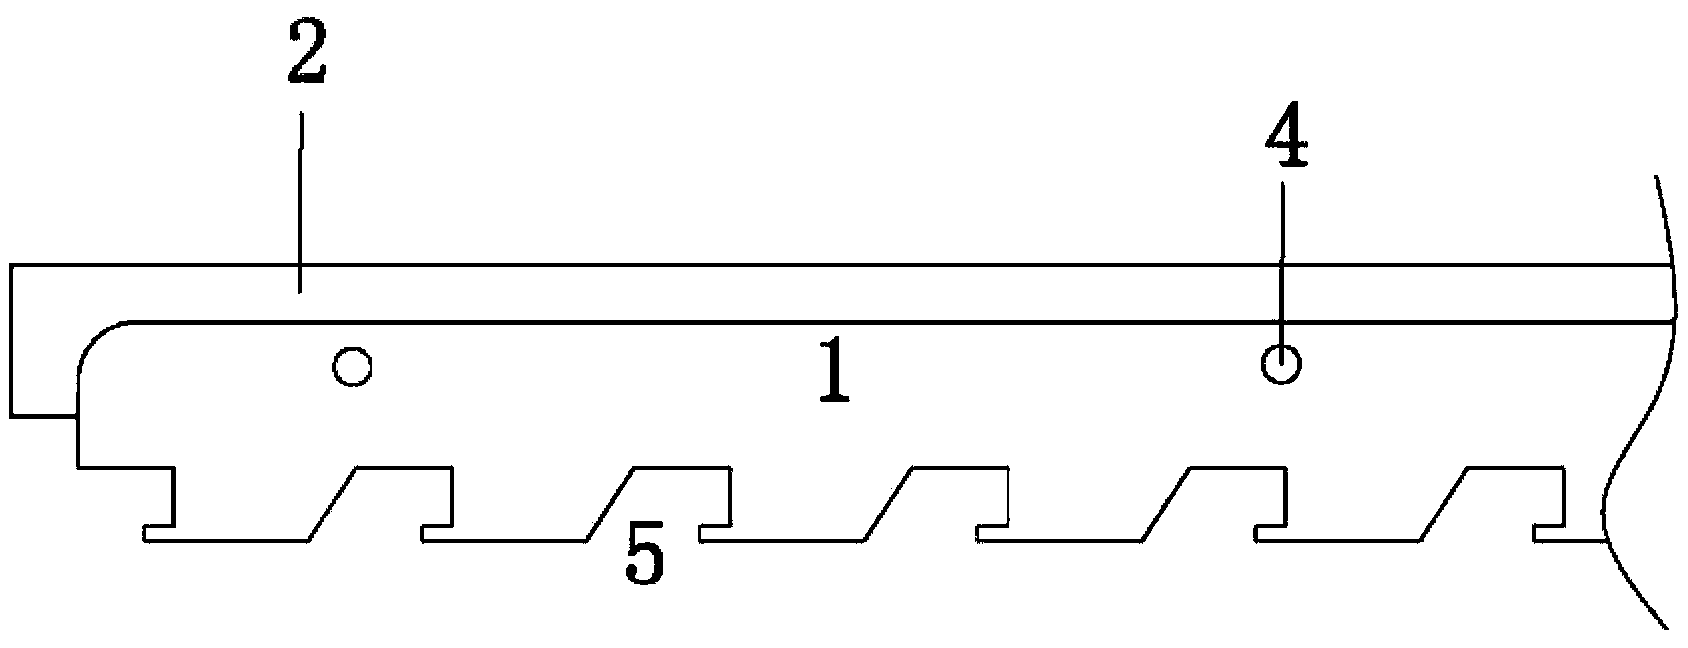 String-up switching mechanism of winding machine